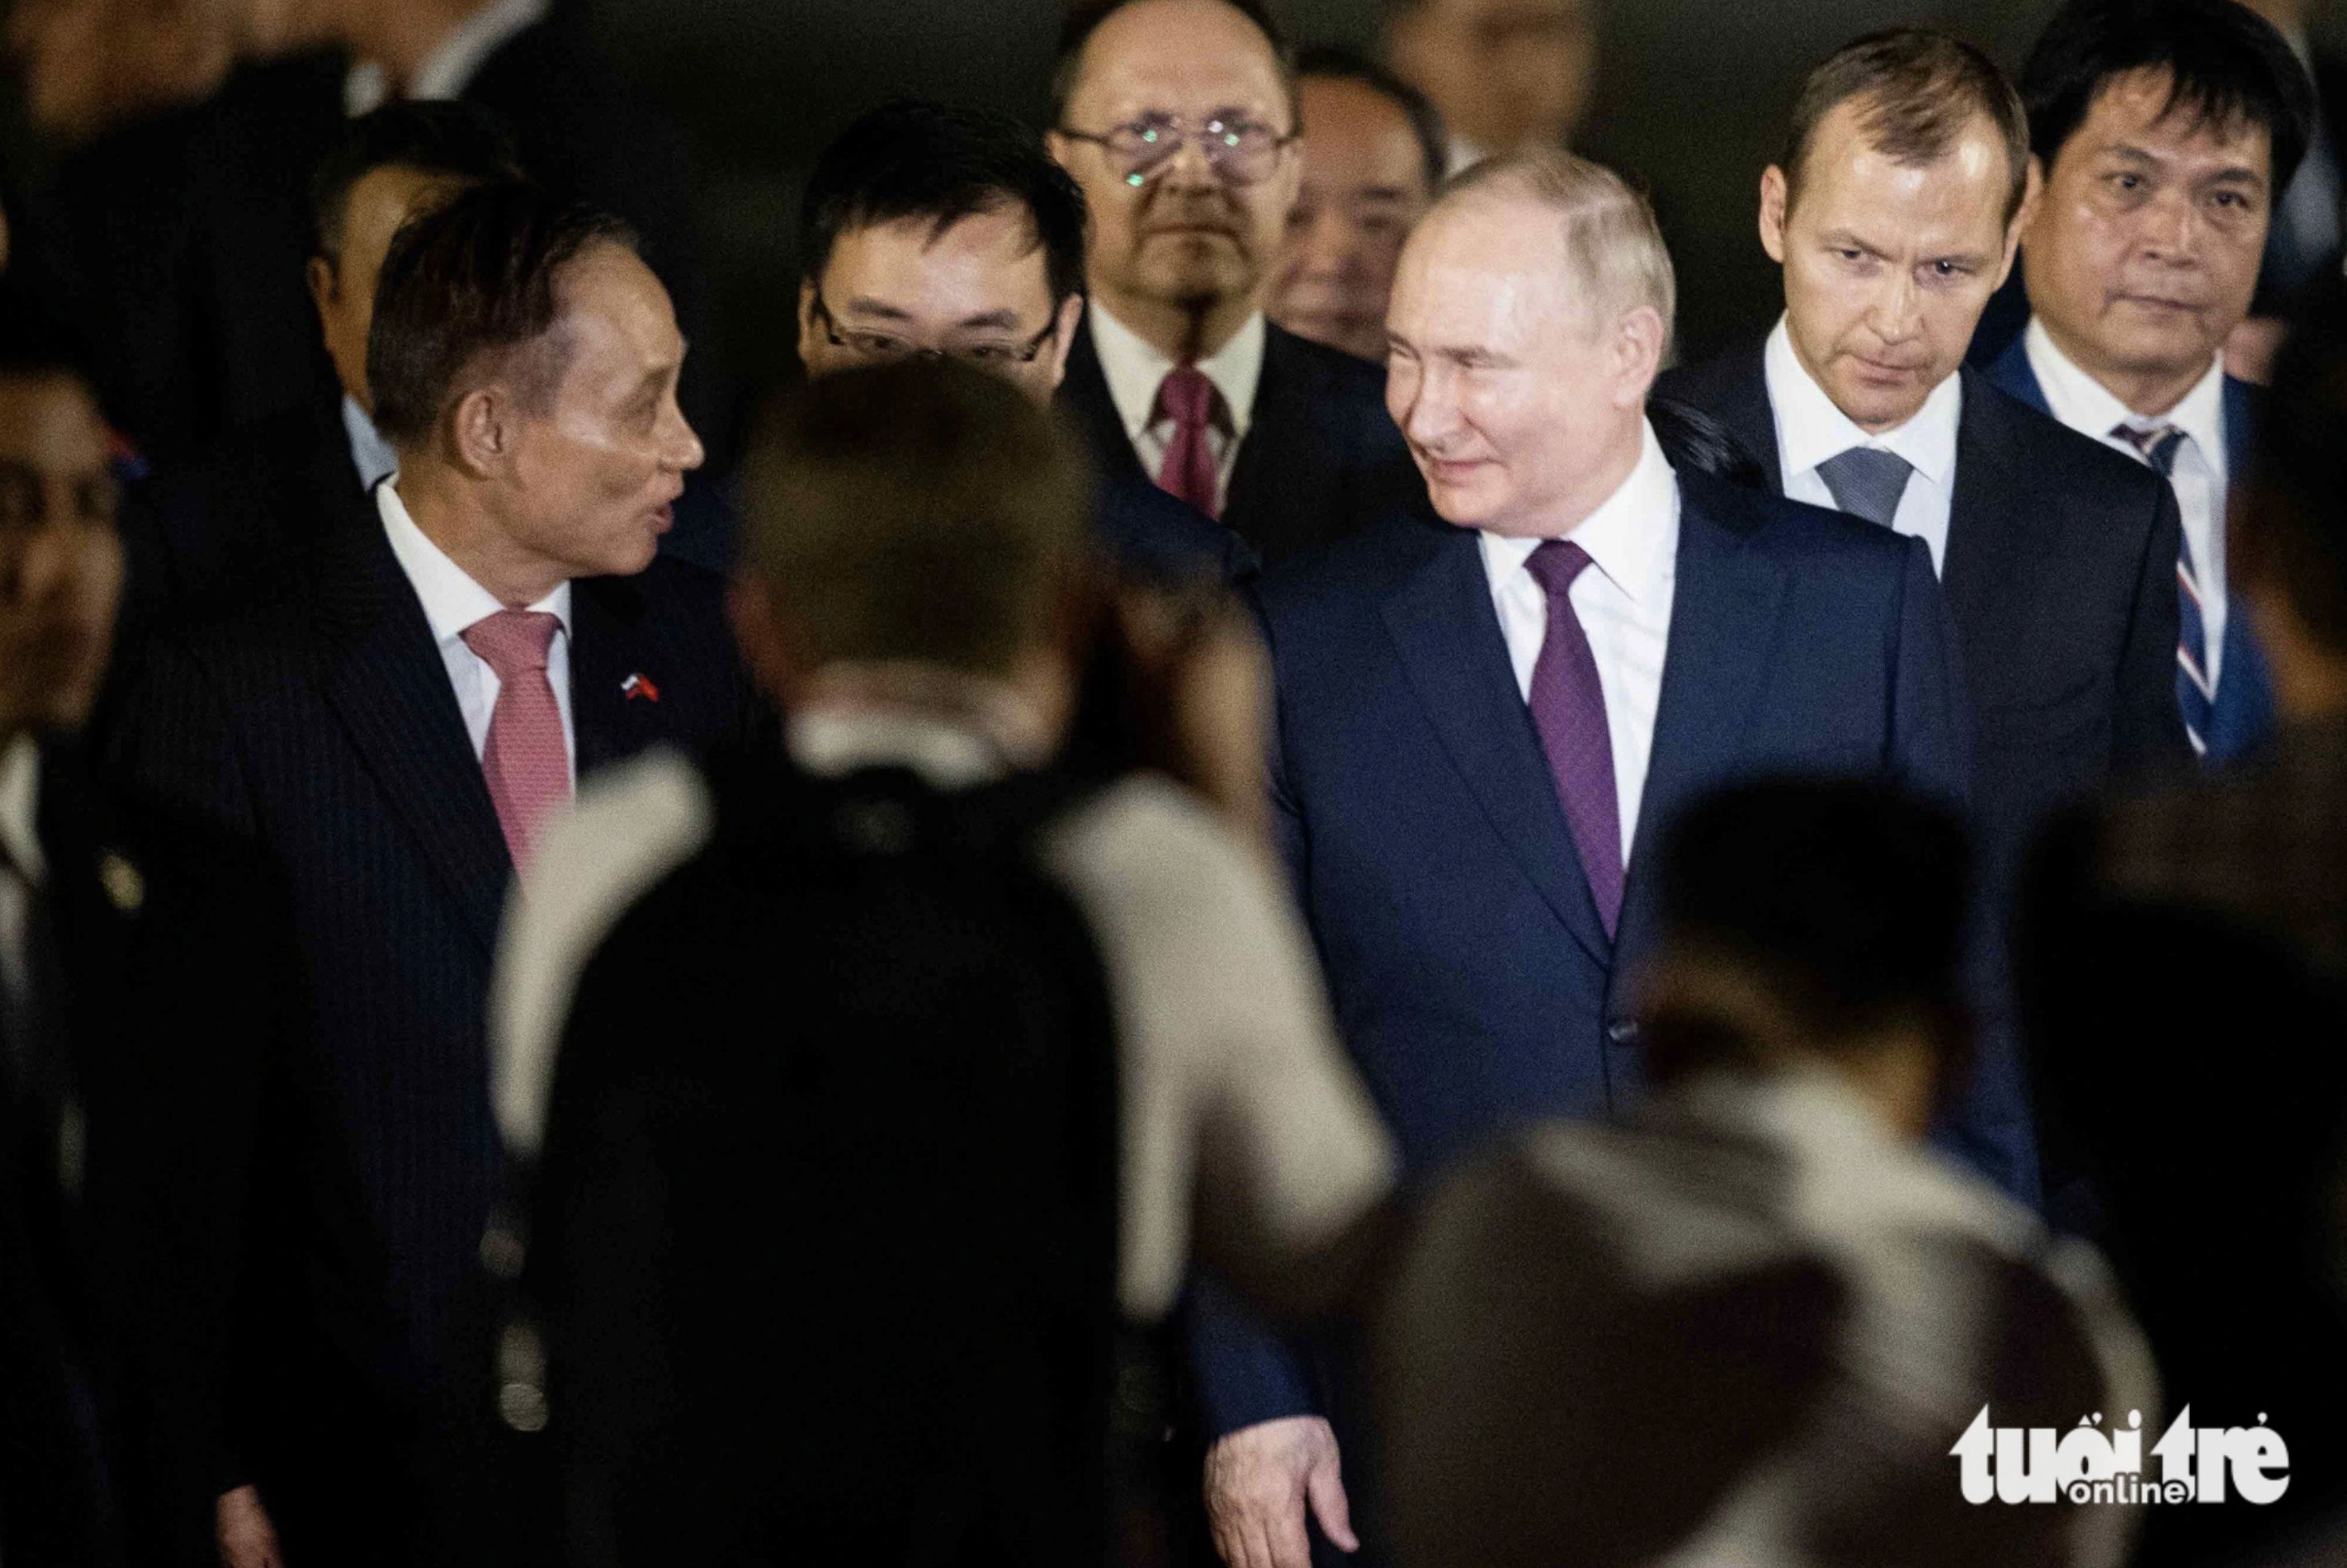 Russian President Vladimir Putin arrives in Vietnam for state visit